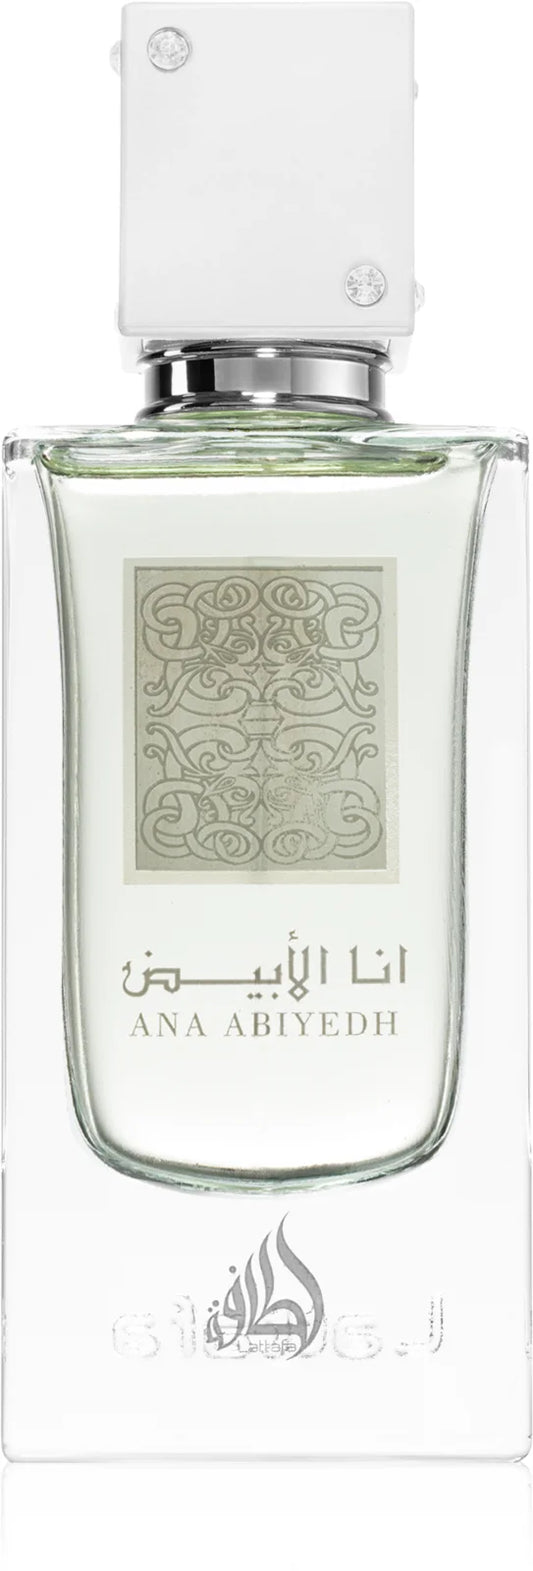 Ana Abiyedh Blanc 60ml - Lattafa Dubaï